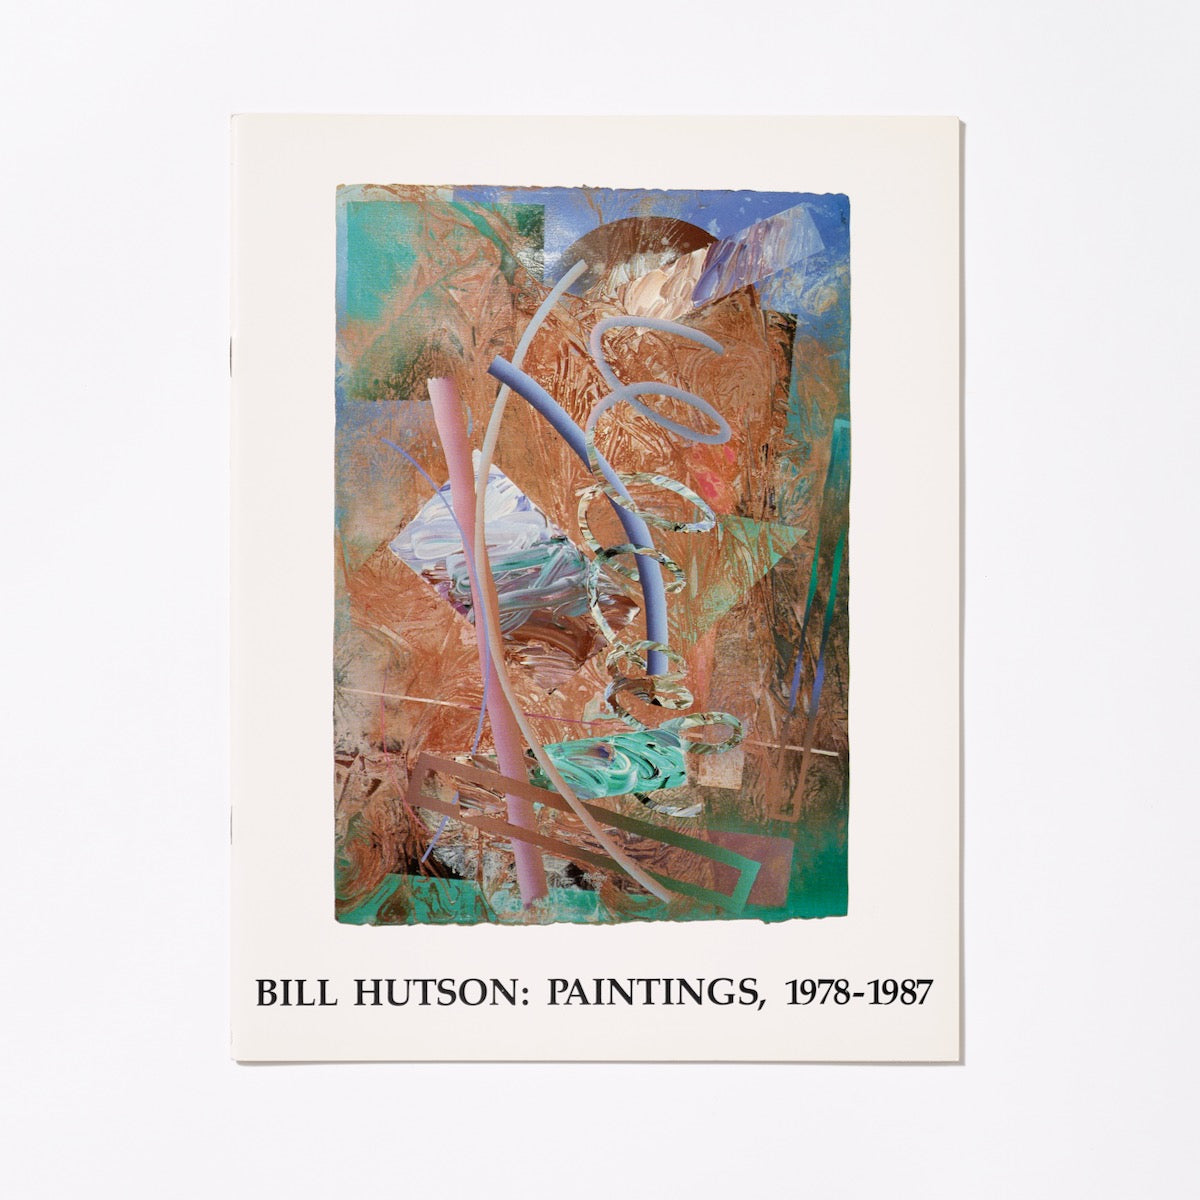 Bill Hutson: Paintings, 1978-1987